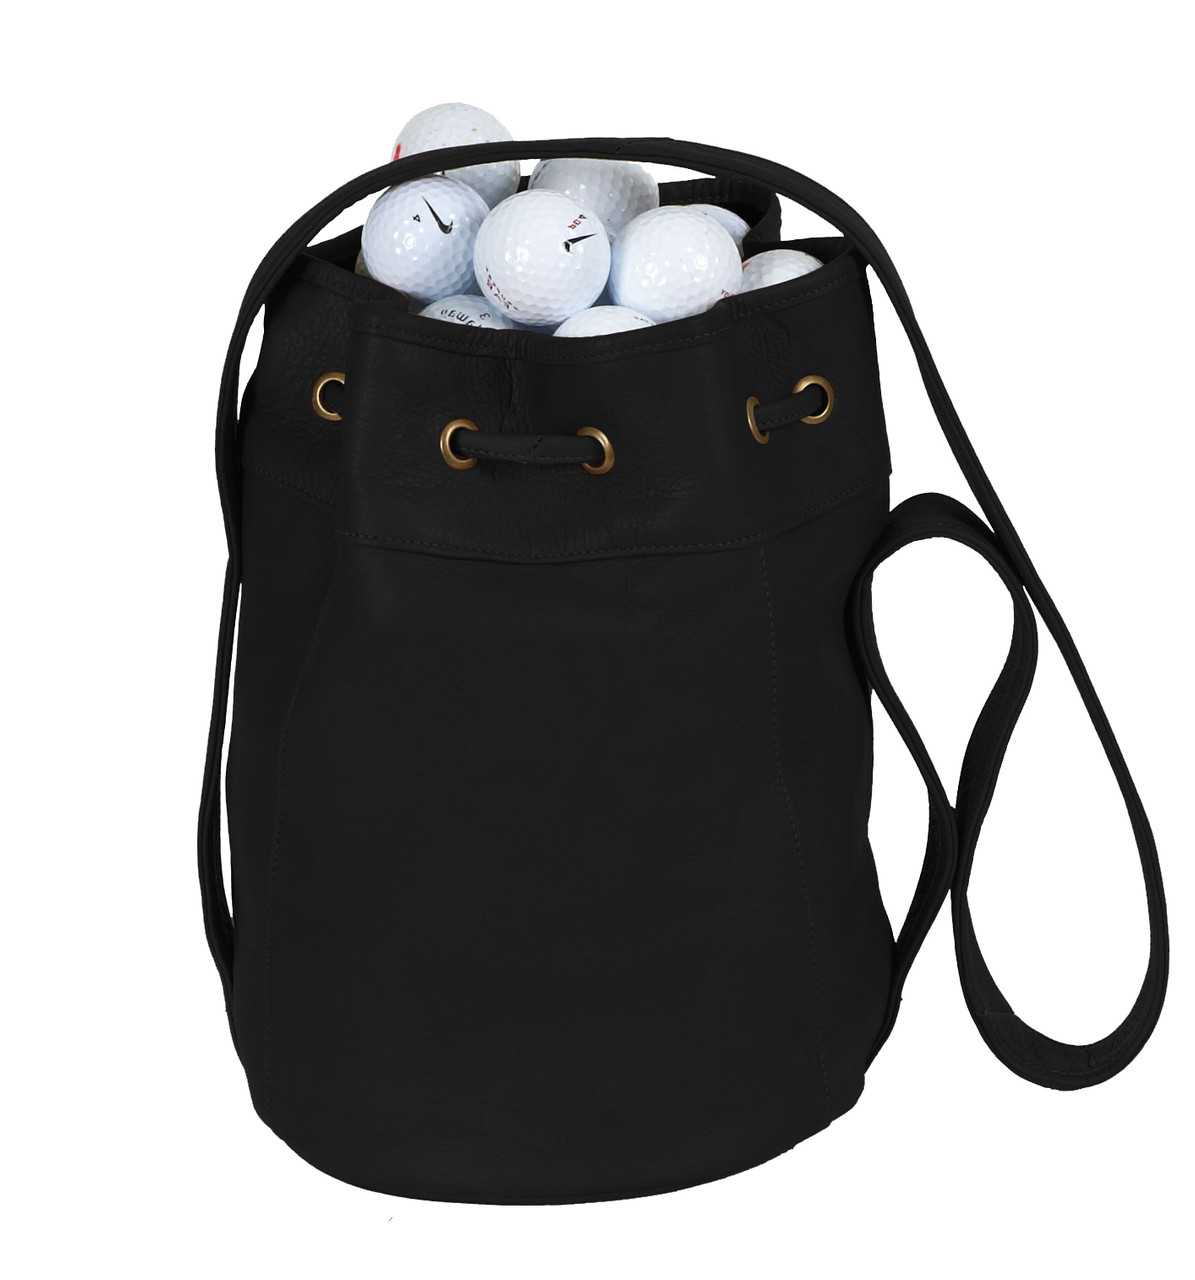 Range Bags - Golf Ball Storage Bag Cotton